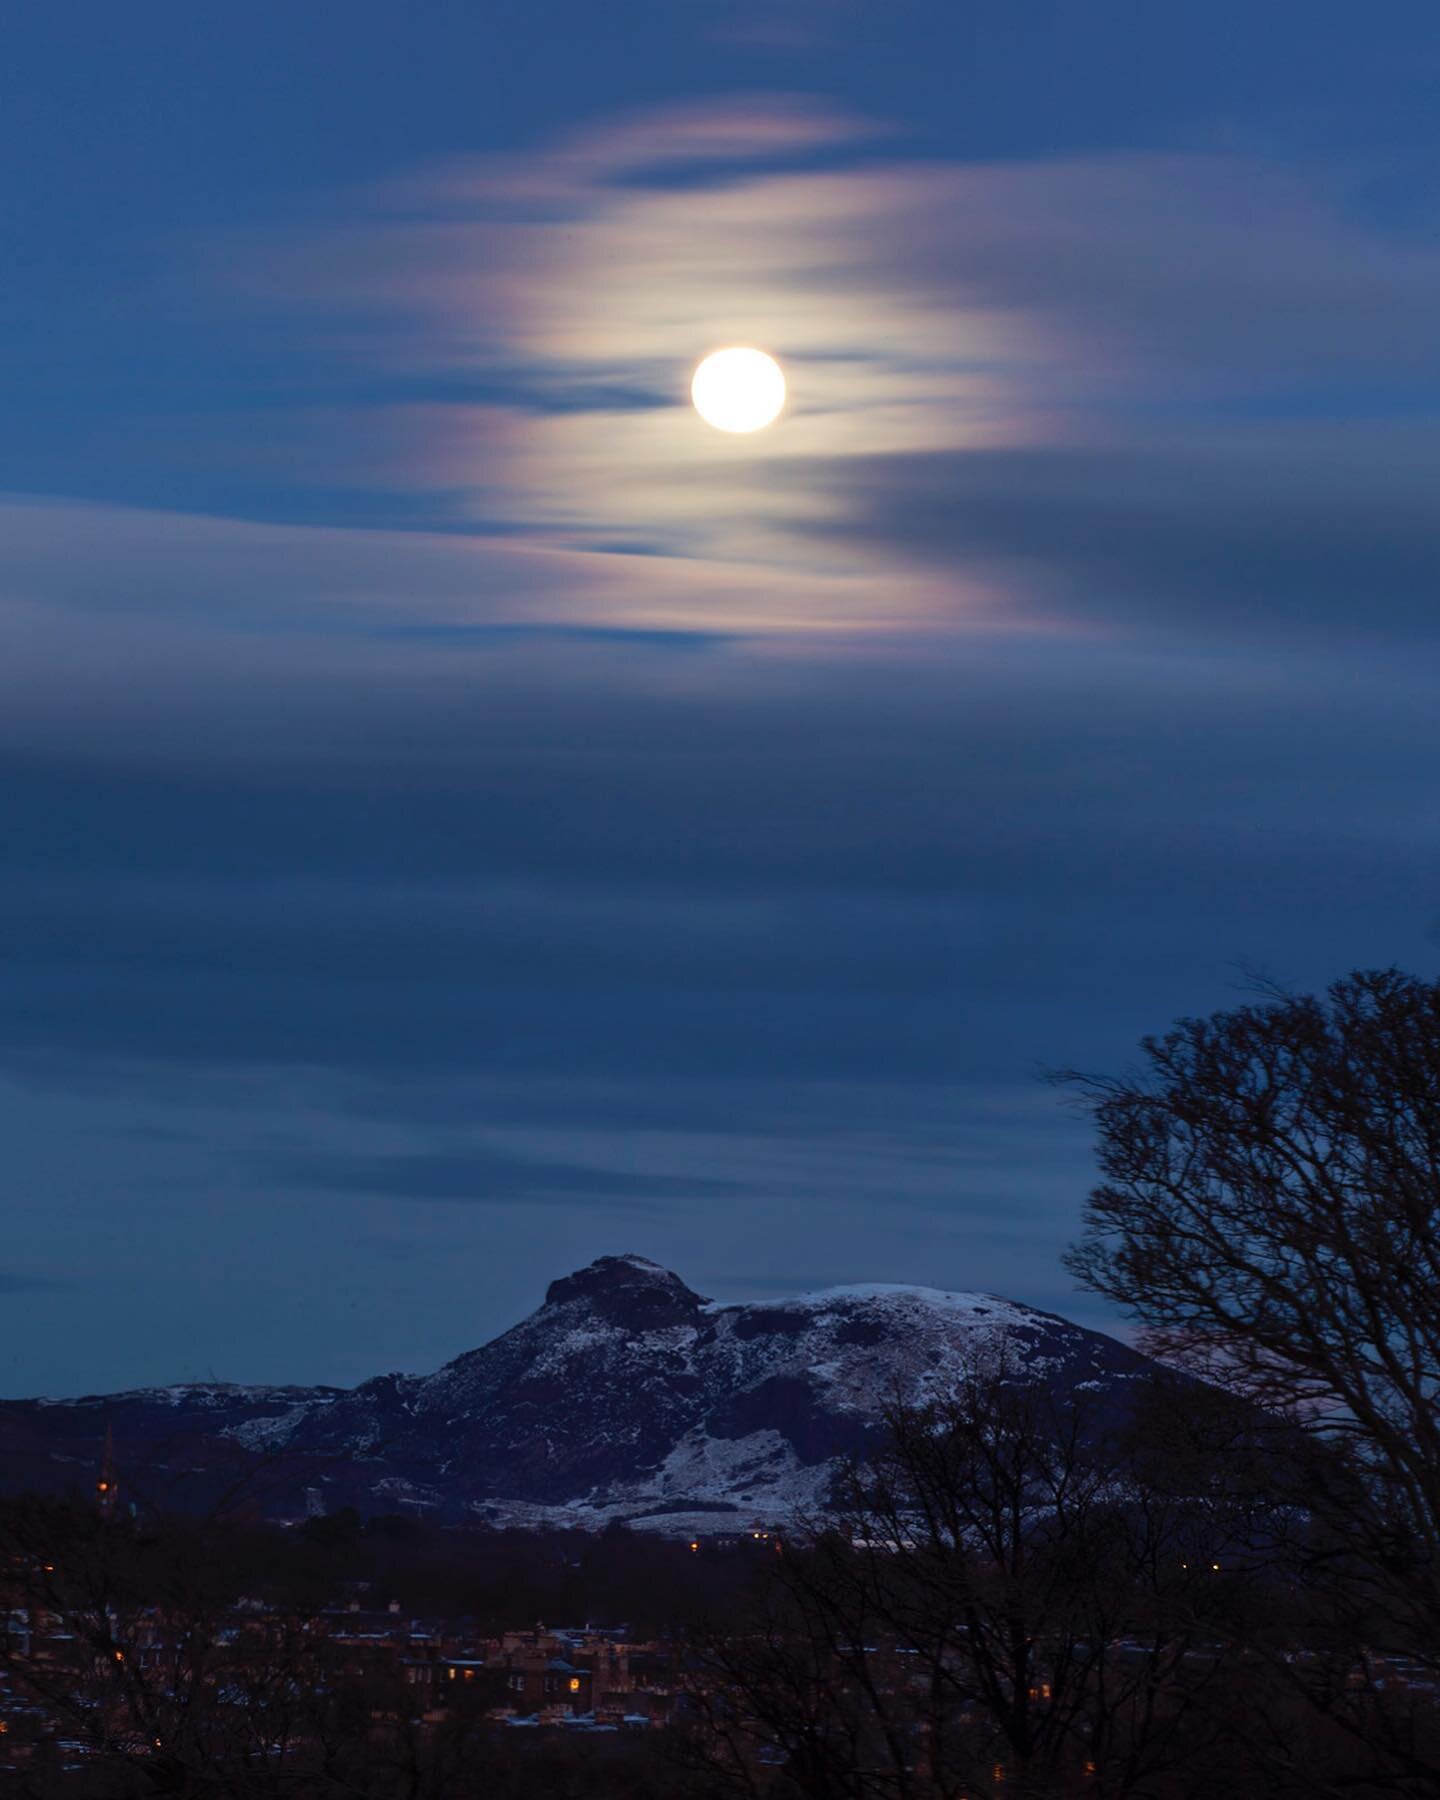 Killer Moonrise tonight. The last Full Moon of 2020.

#4pm #moonrise #arthursseat #scotlandinwinter #moonscape #locationphotography #environmentalphotography #scotland #photographer #onlocation #takeitoutside #edinburgh #commercialphotographer #adver